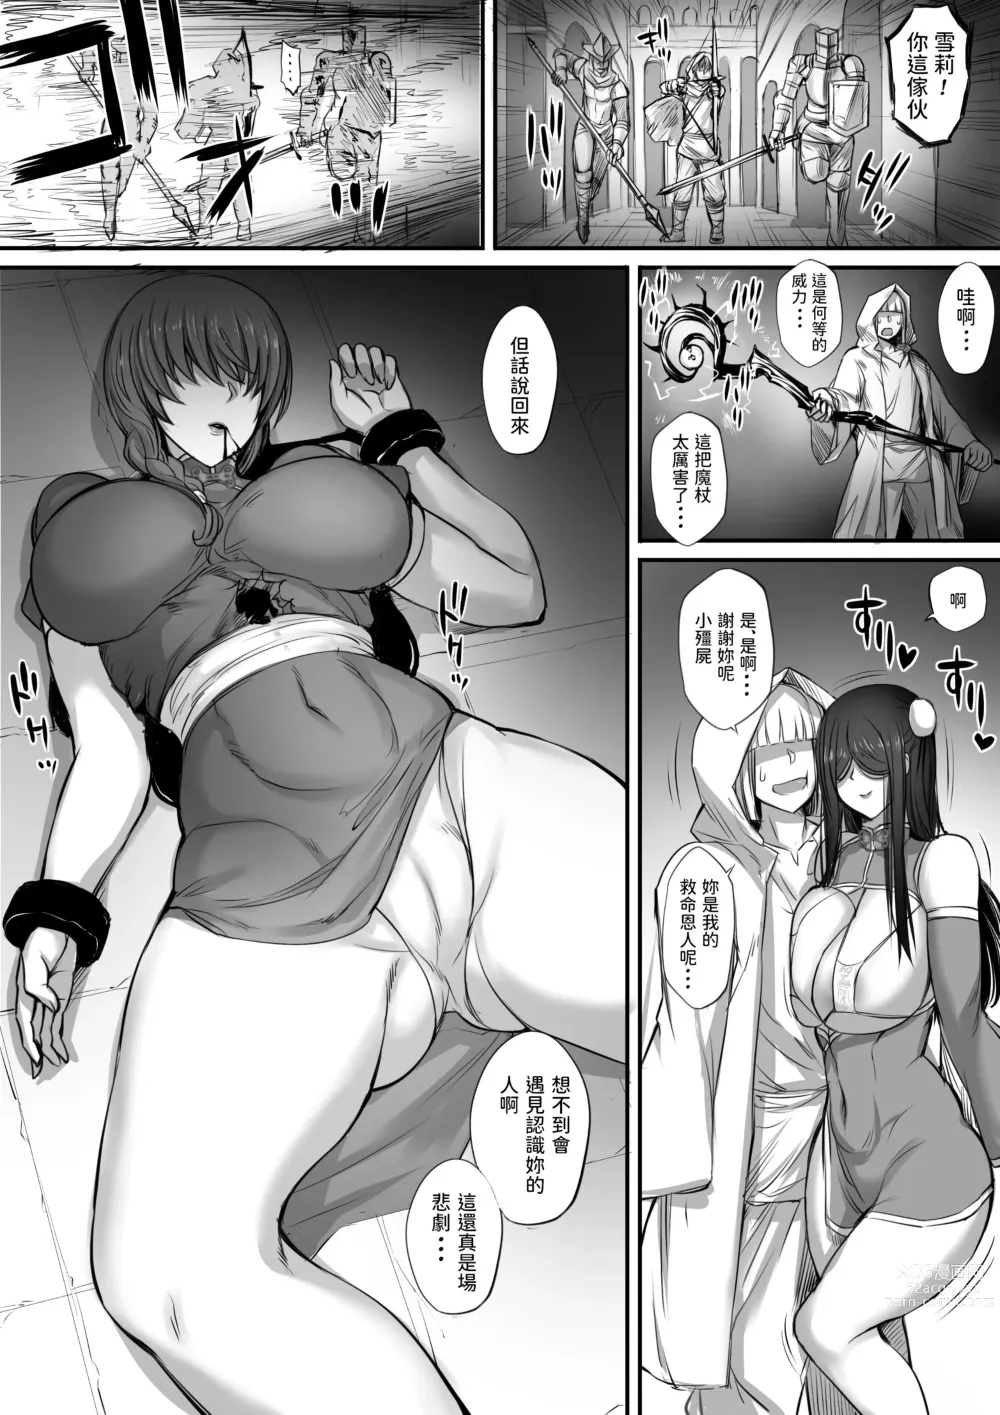 Page 5 of doujinshi 迷宮で死体を拾ってキョンシーにしてみた話2